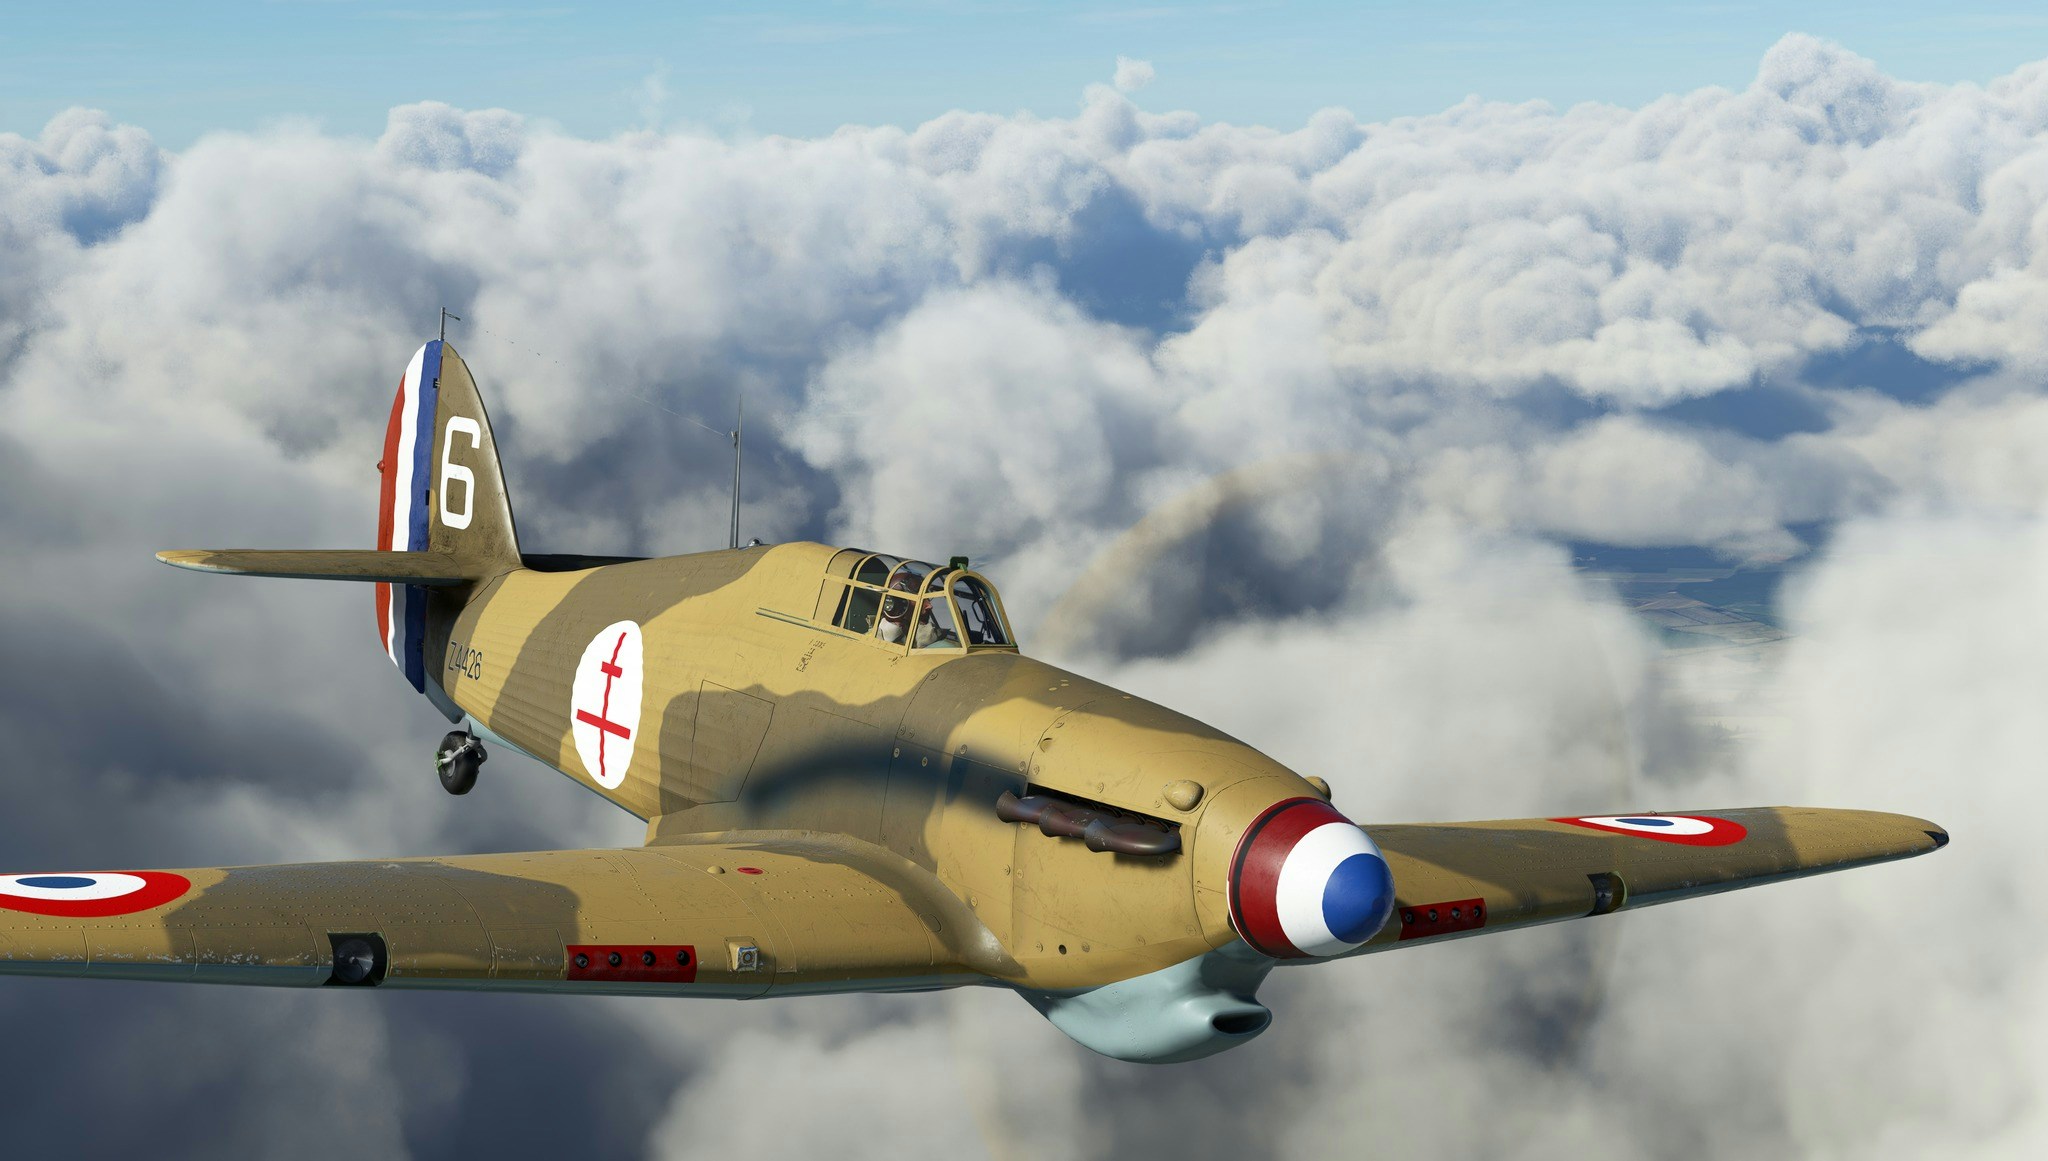 Aeroplane Heaven Announces Spitfire Prototype, Previews Hawker Hurricane